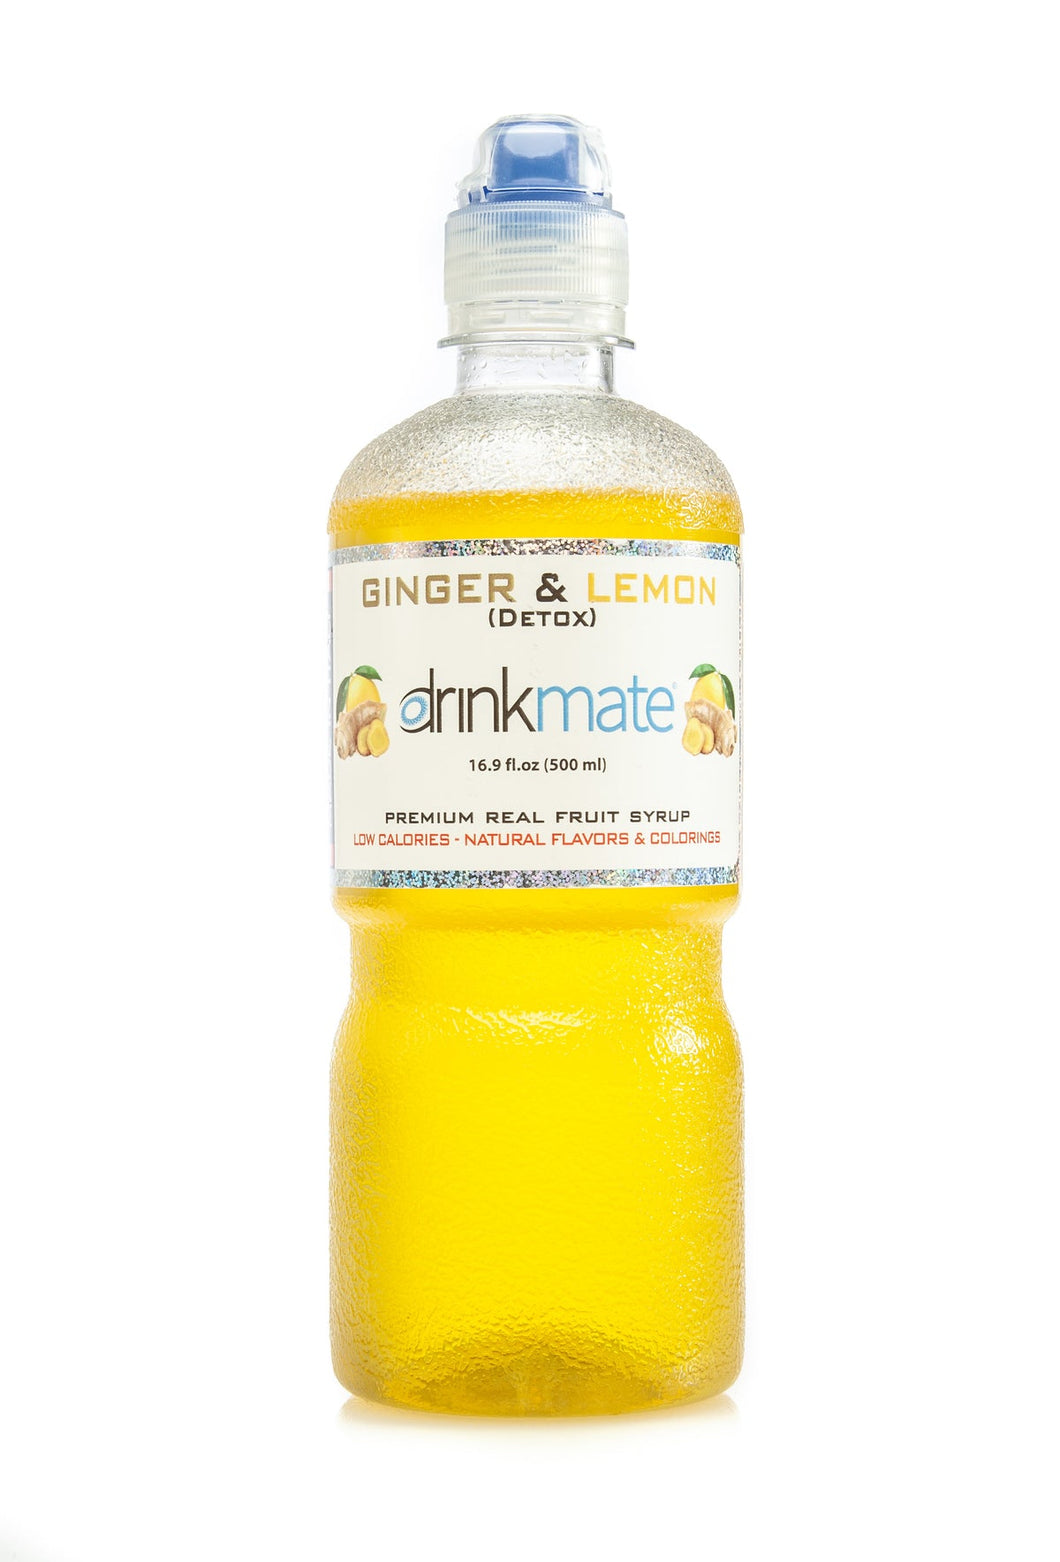 Drinkmate Italian Ginger Lemon Premium Syrup